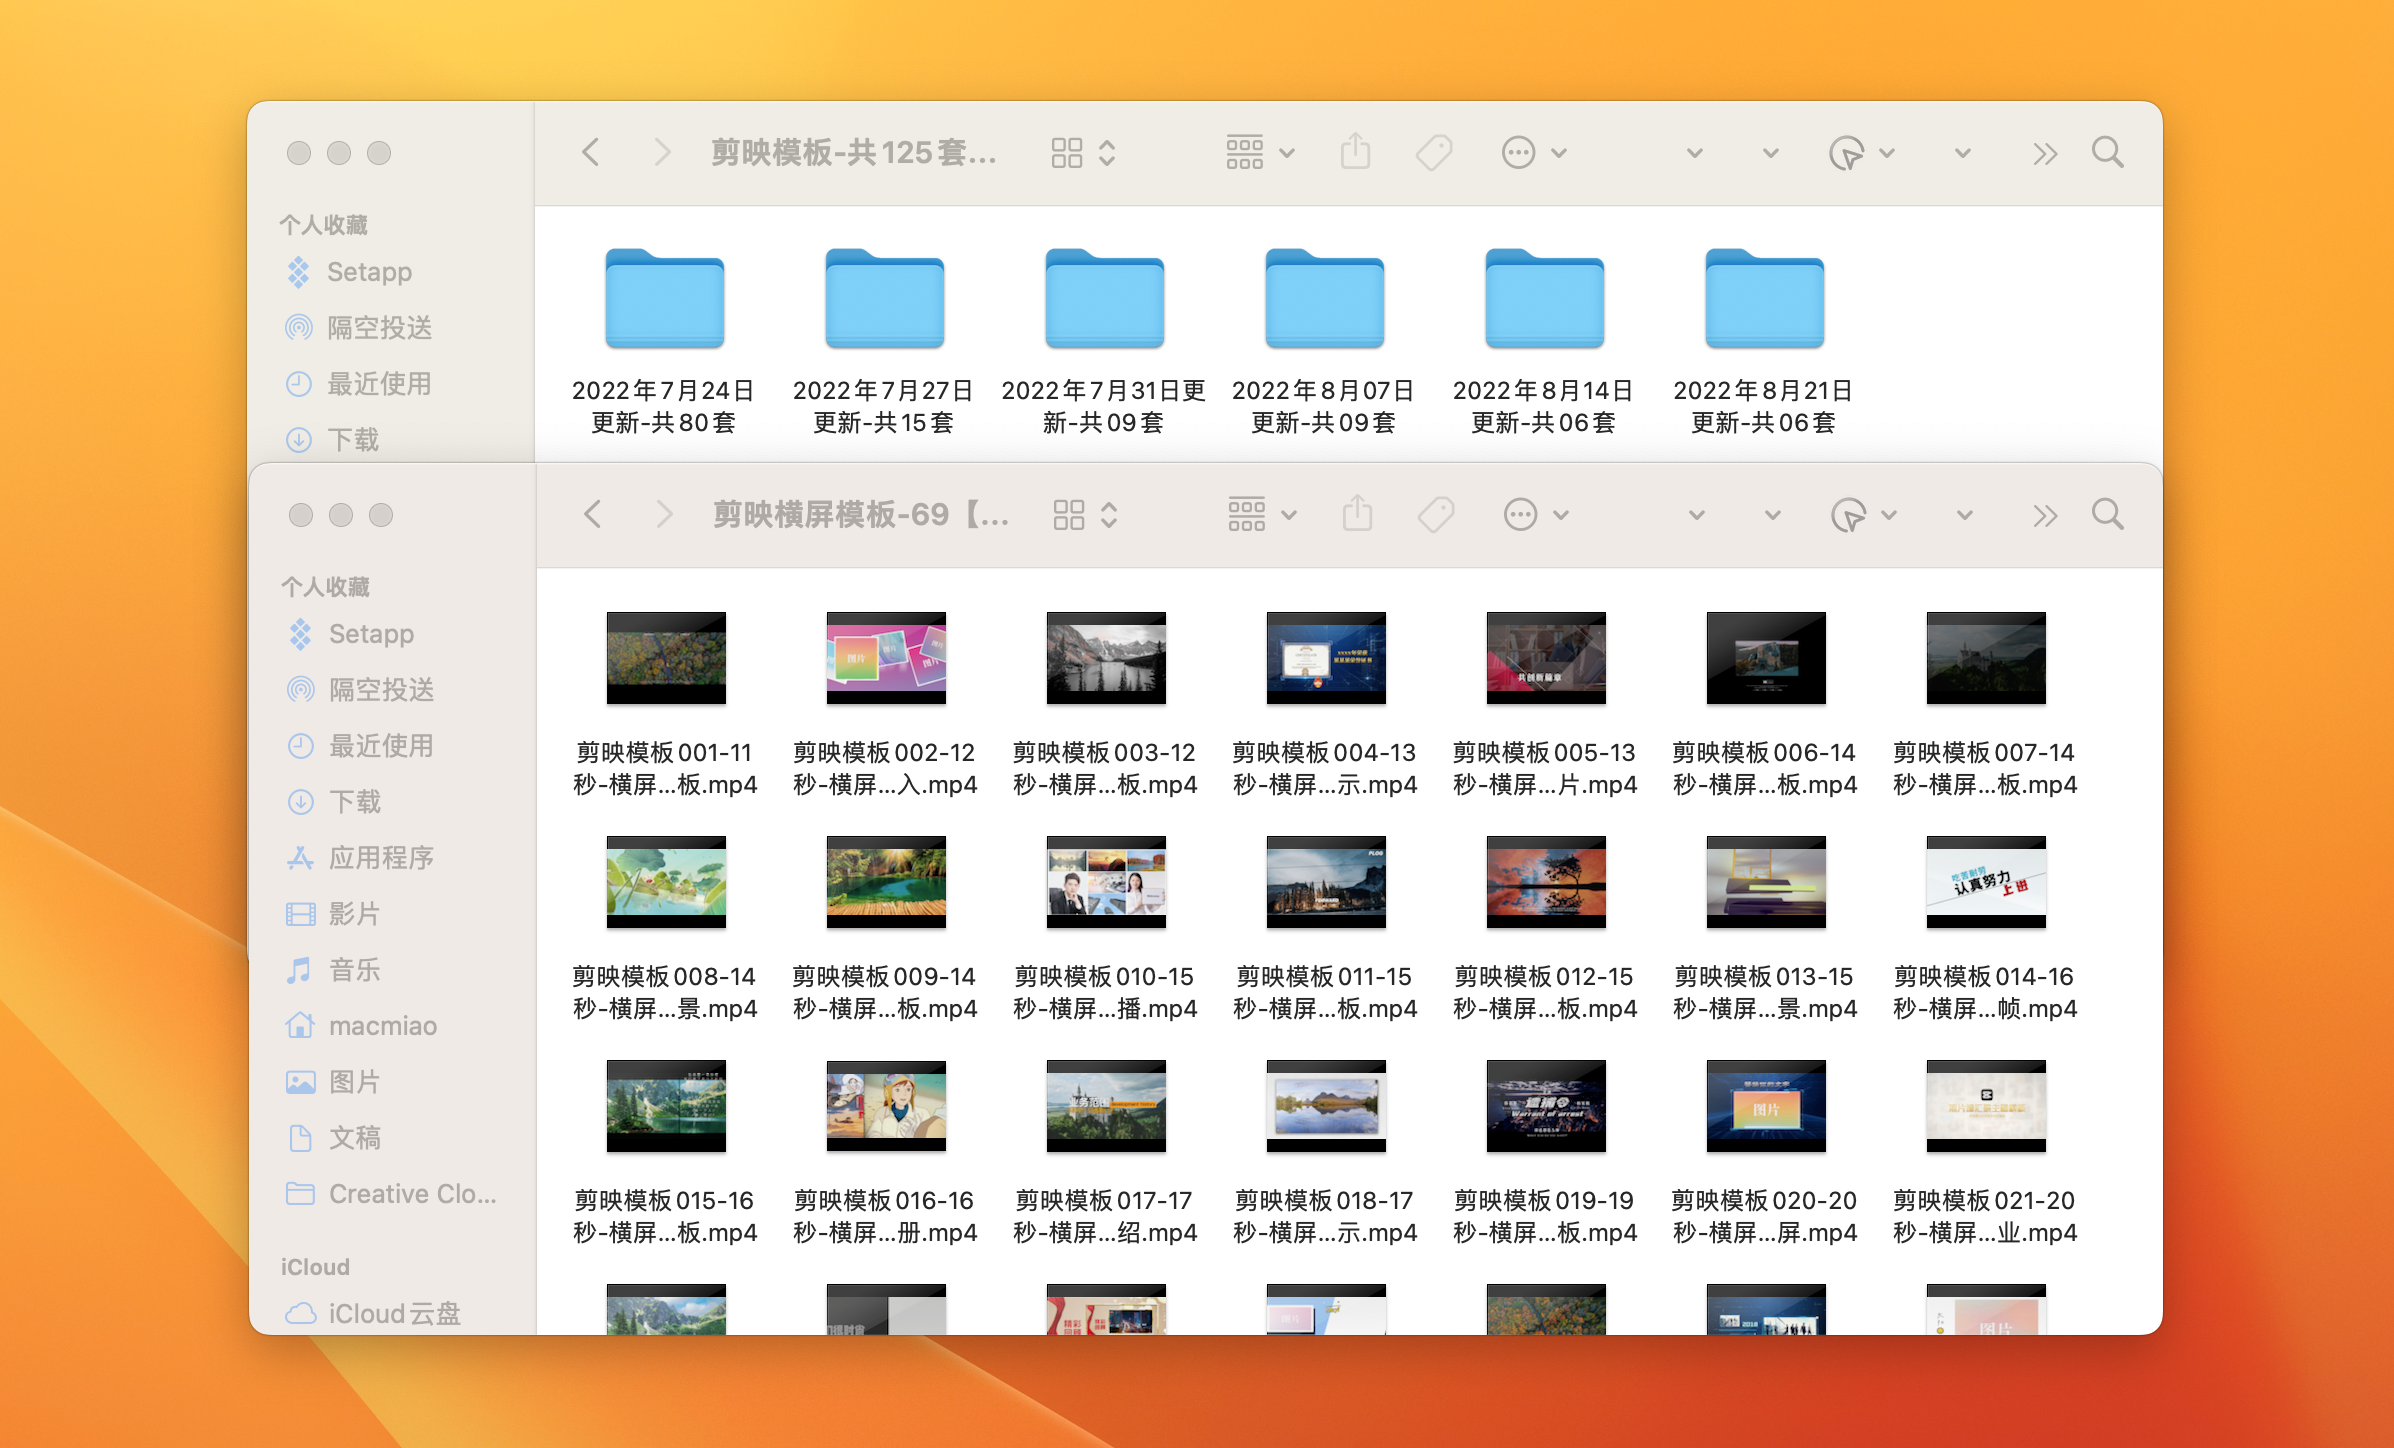 CapCut 剪映国际版 for mac v1.3.2 中文版 解锁全部权限无广告